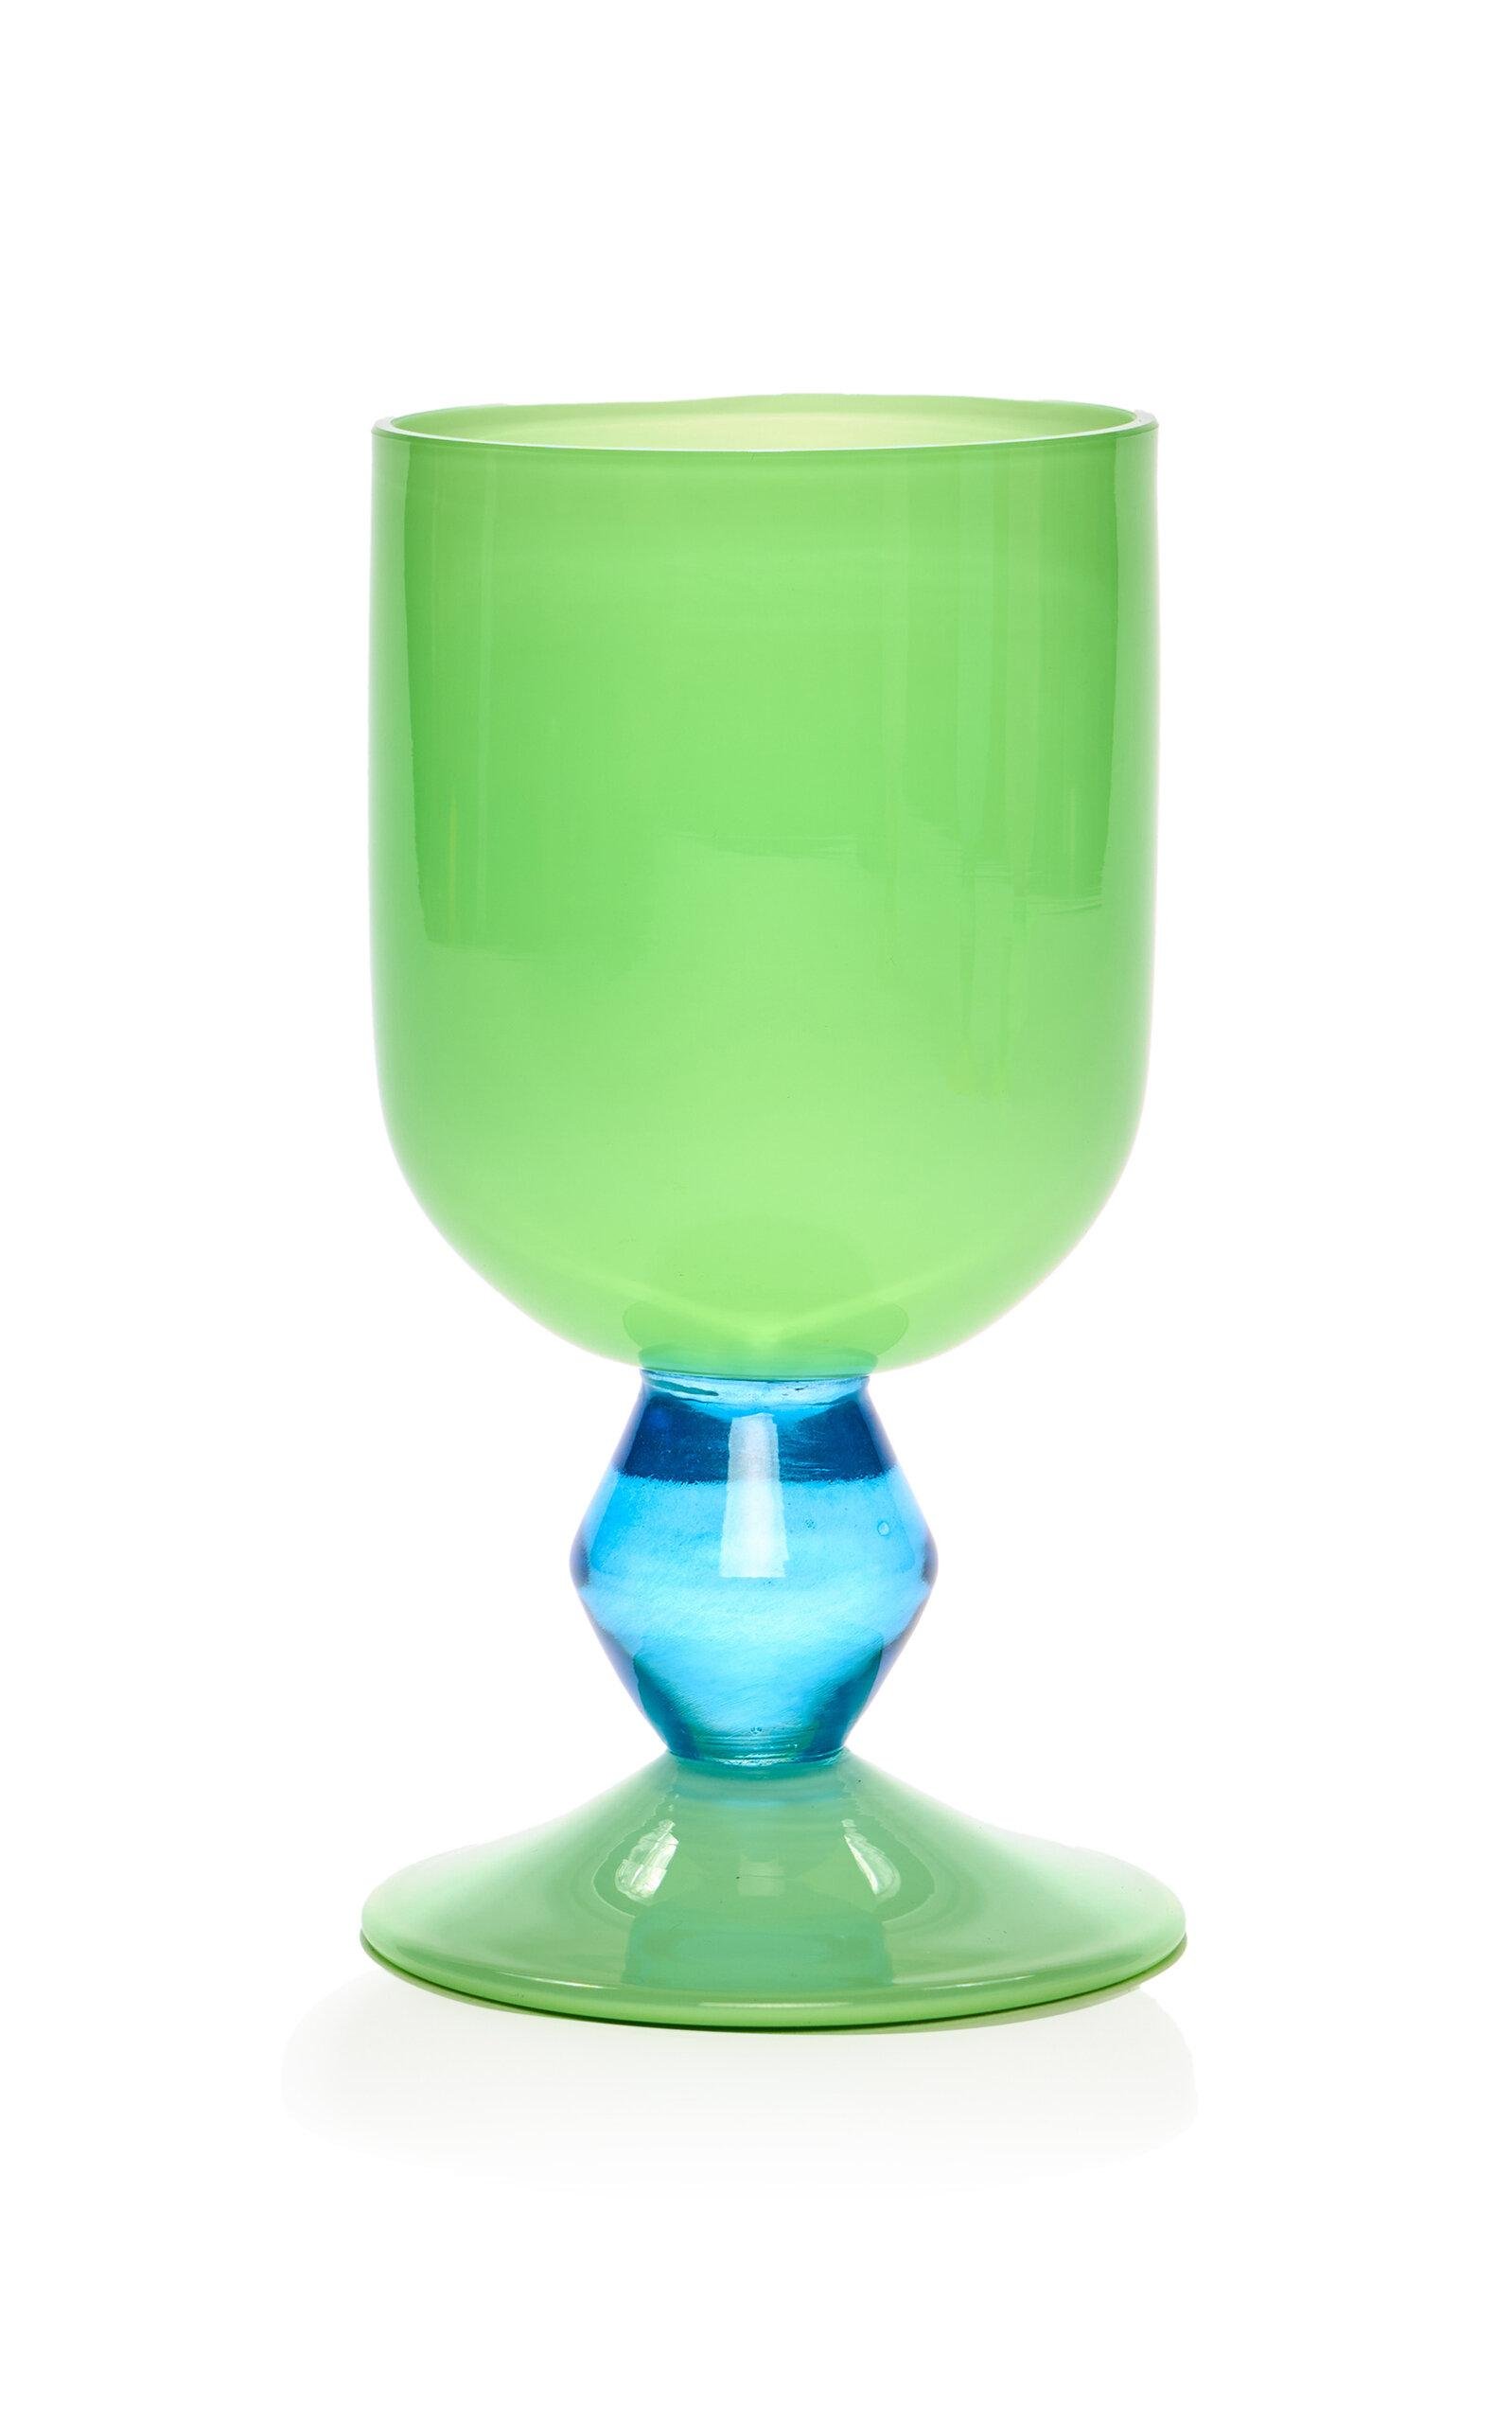 Gather - Miami Sweetie Glass - Lime Green - Moda Operandi by GATHER